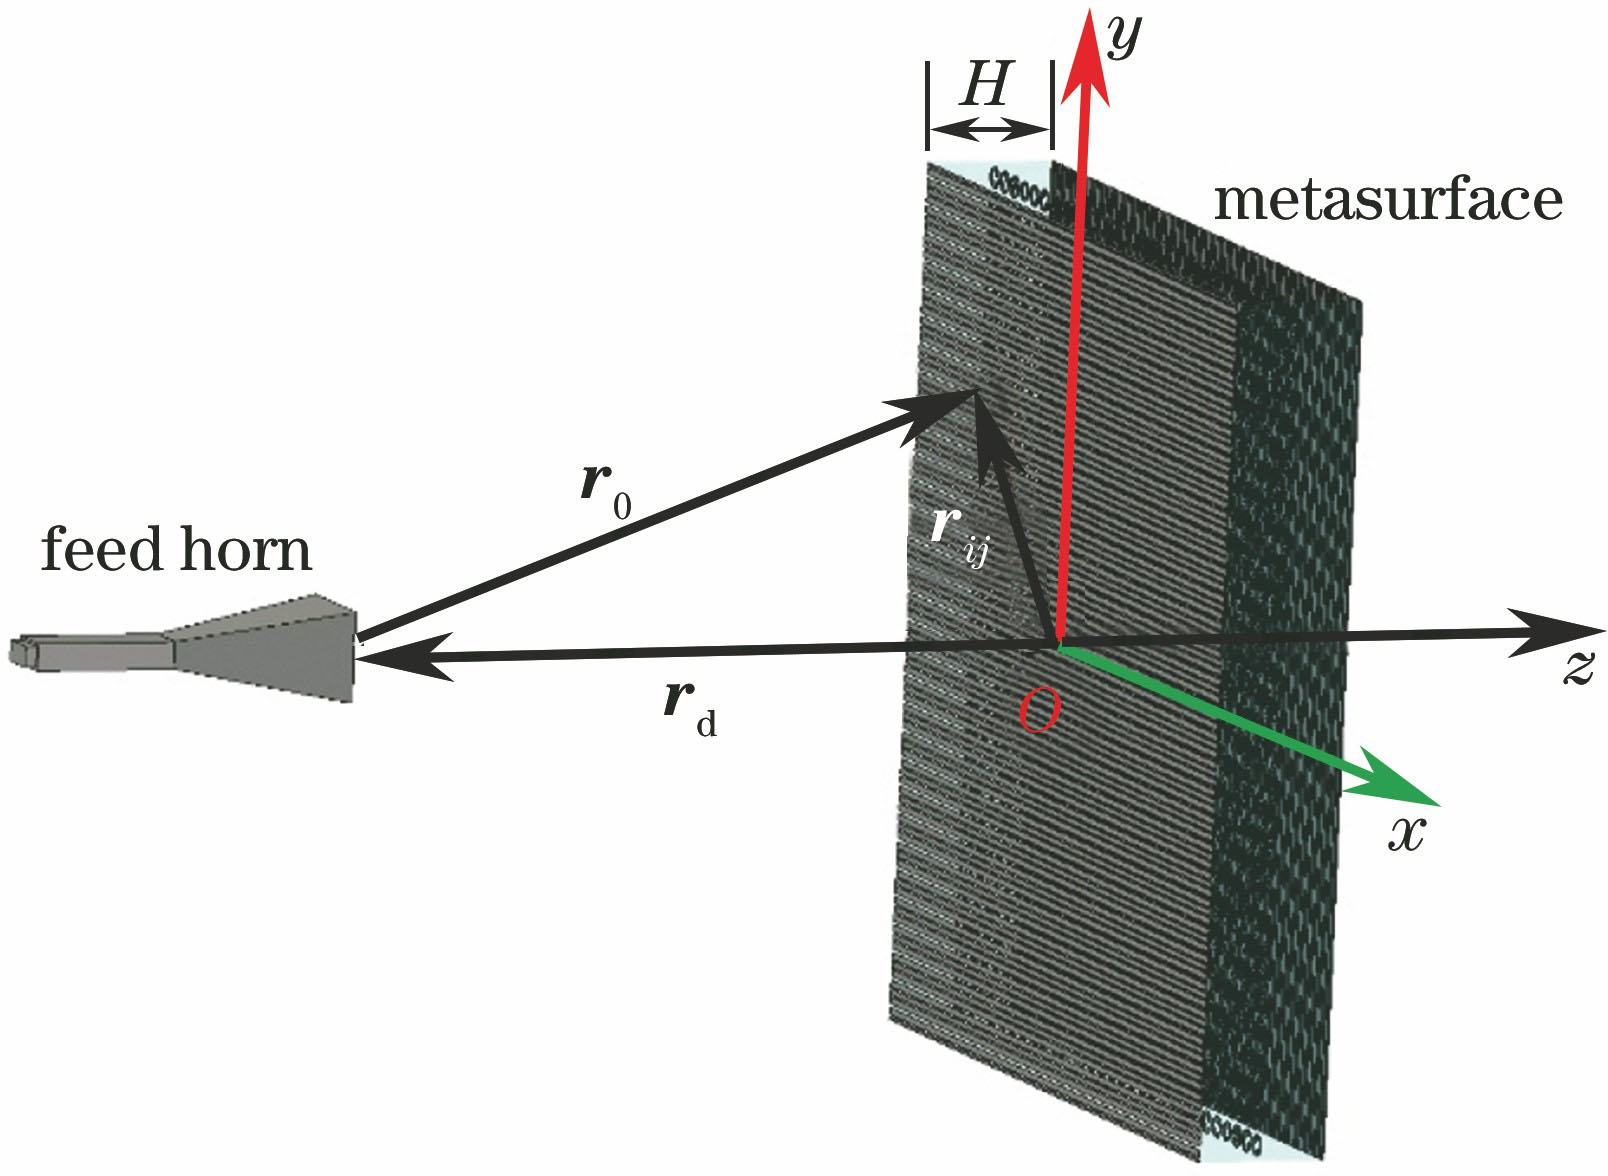 Structural diagram of metasurface